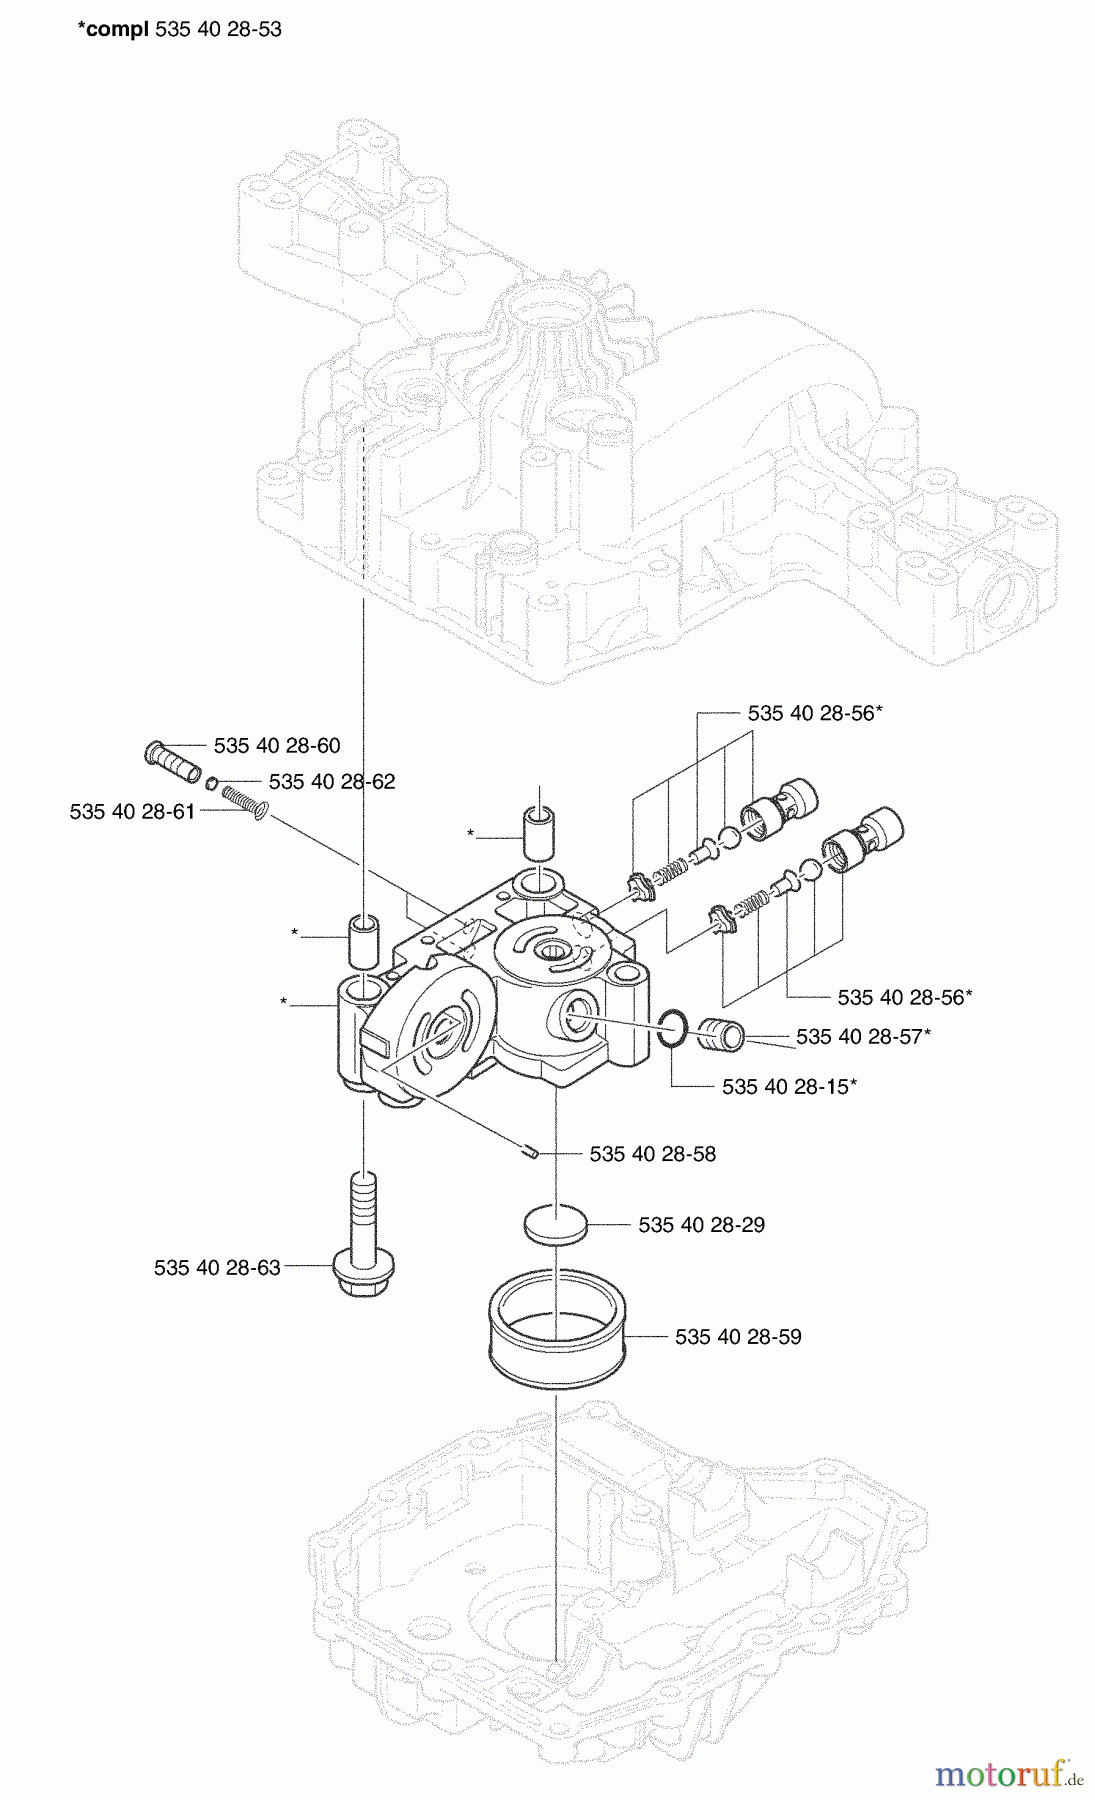  Husqvarna Motoren K 46 - Tuff Torq Transmission (2002-06 & After) Center Case